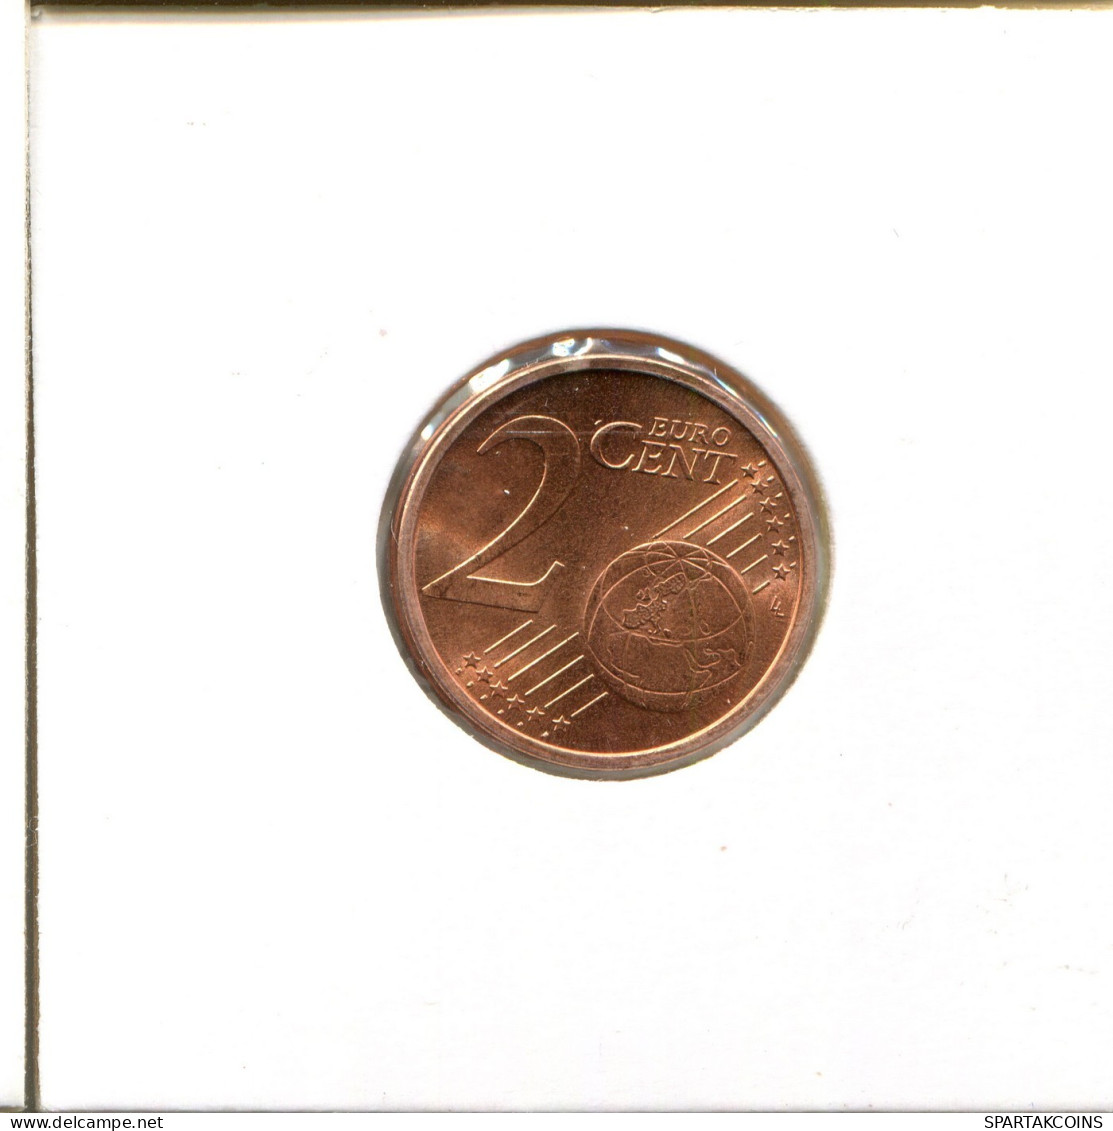 2 EURO CENTS 2004 GERMANY Coin #EU140.U.A - Deutschland